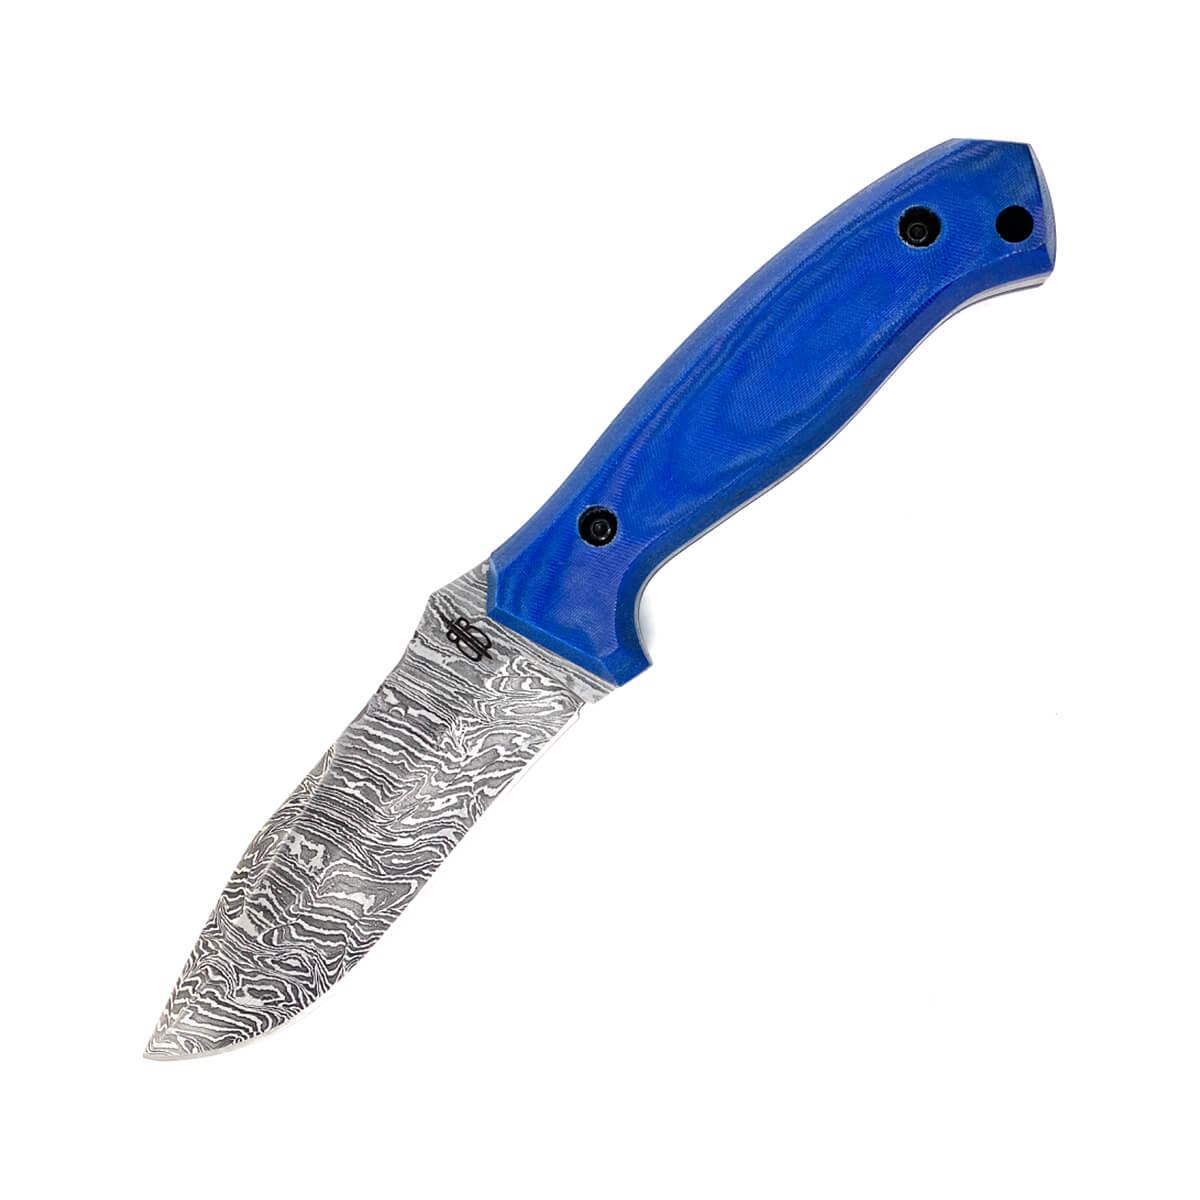  Blue Pro- Lite Hunter Knife